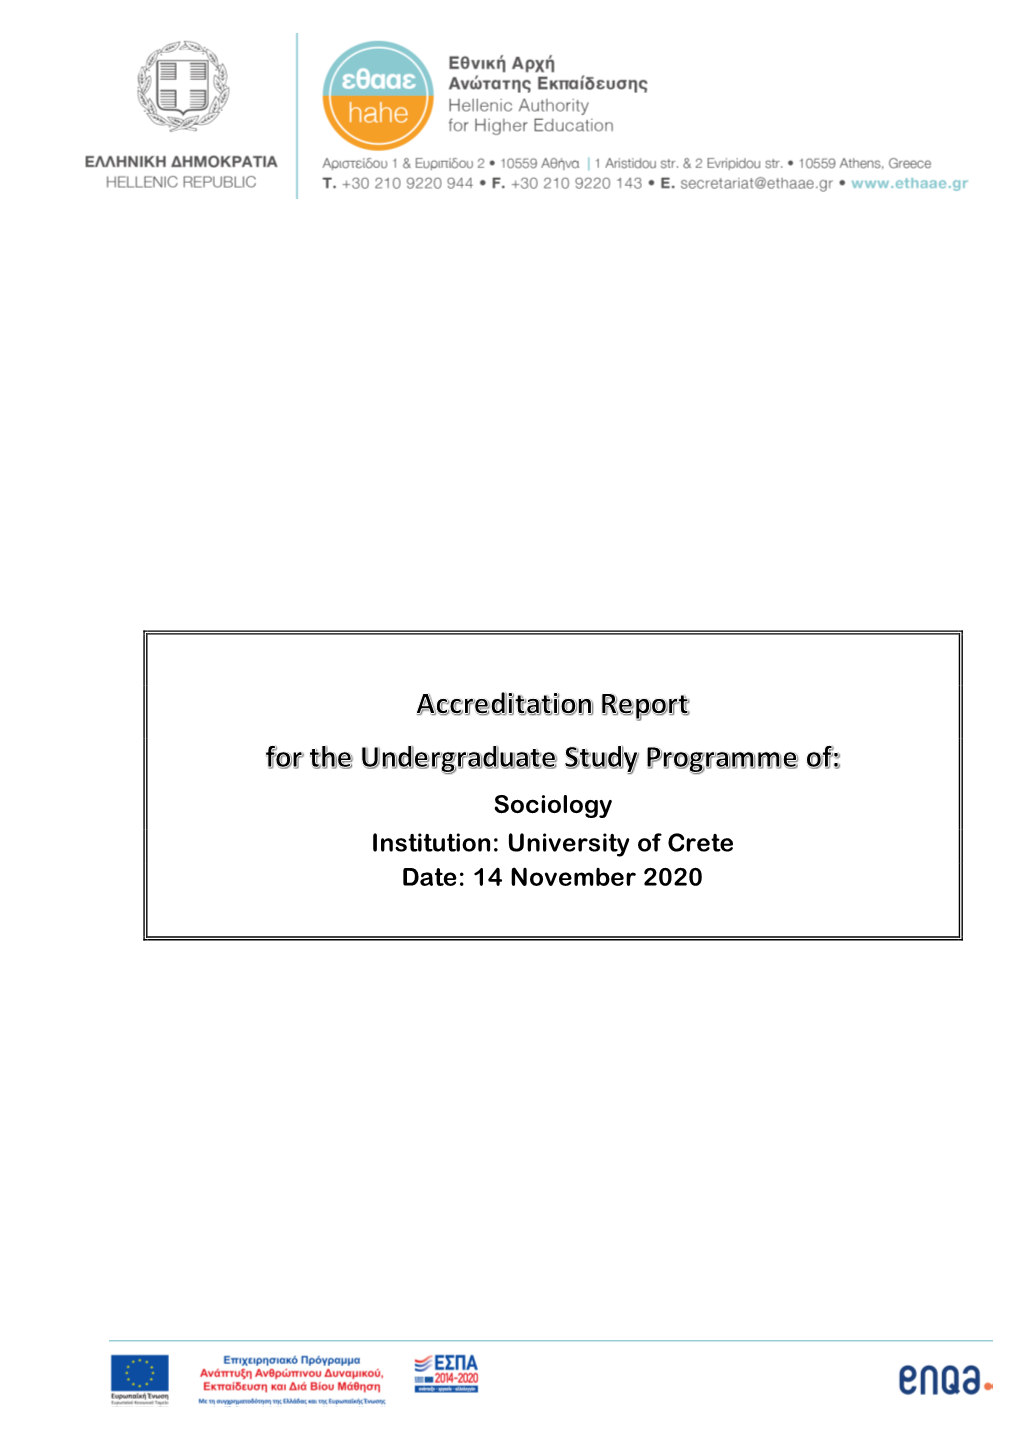 Sociology Institution: University of Crete Date: 14 November 2020